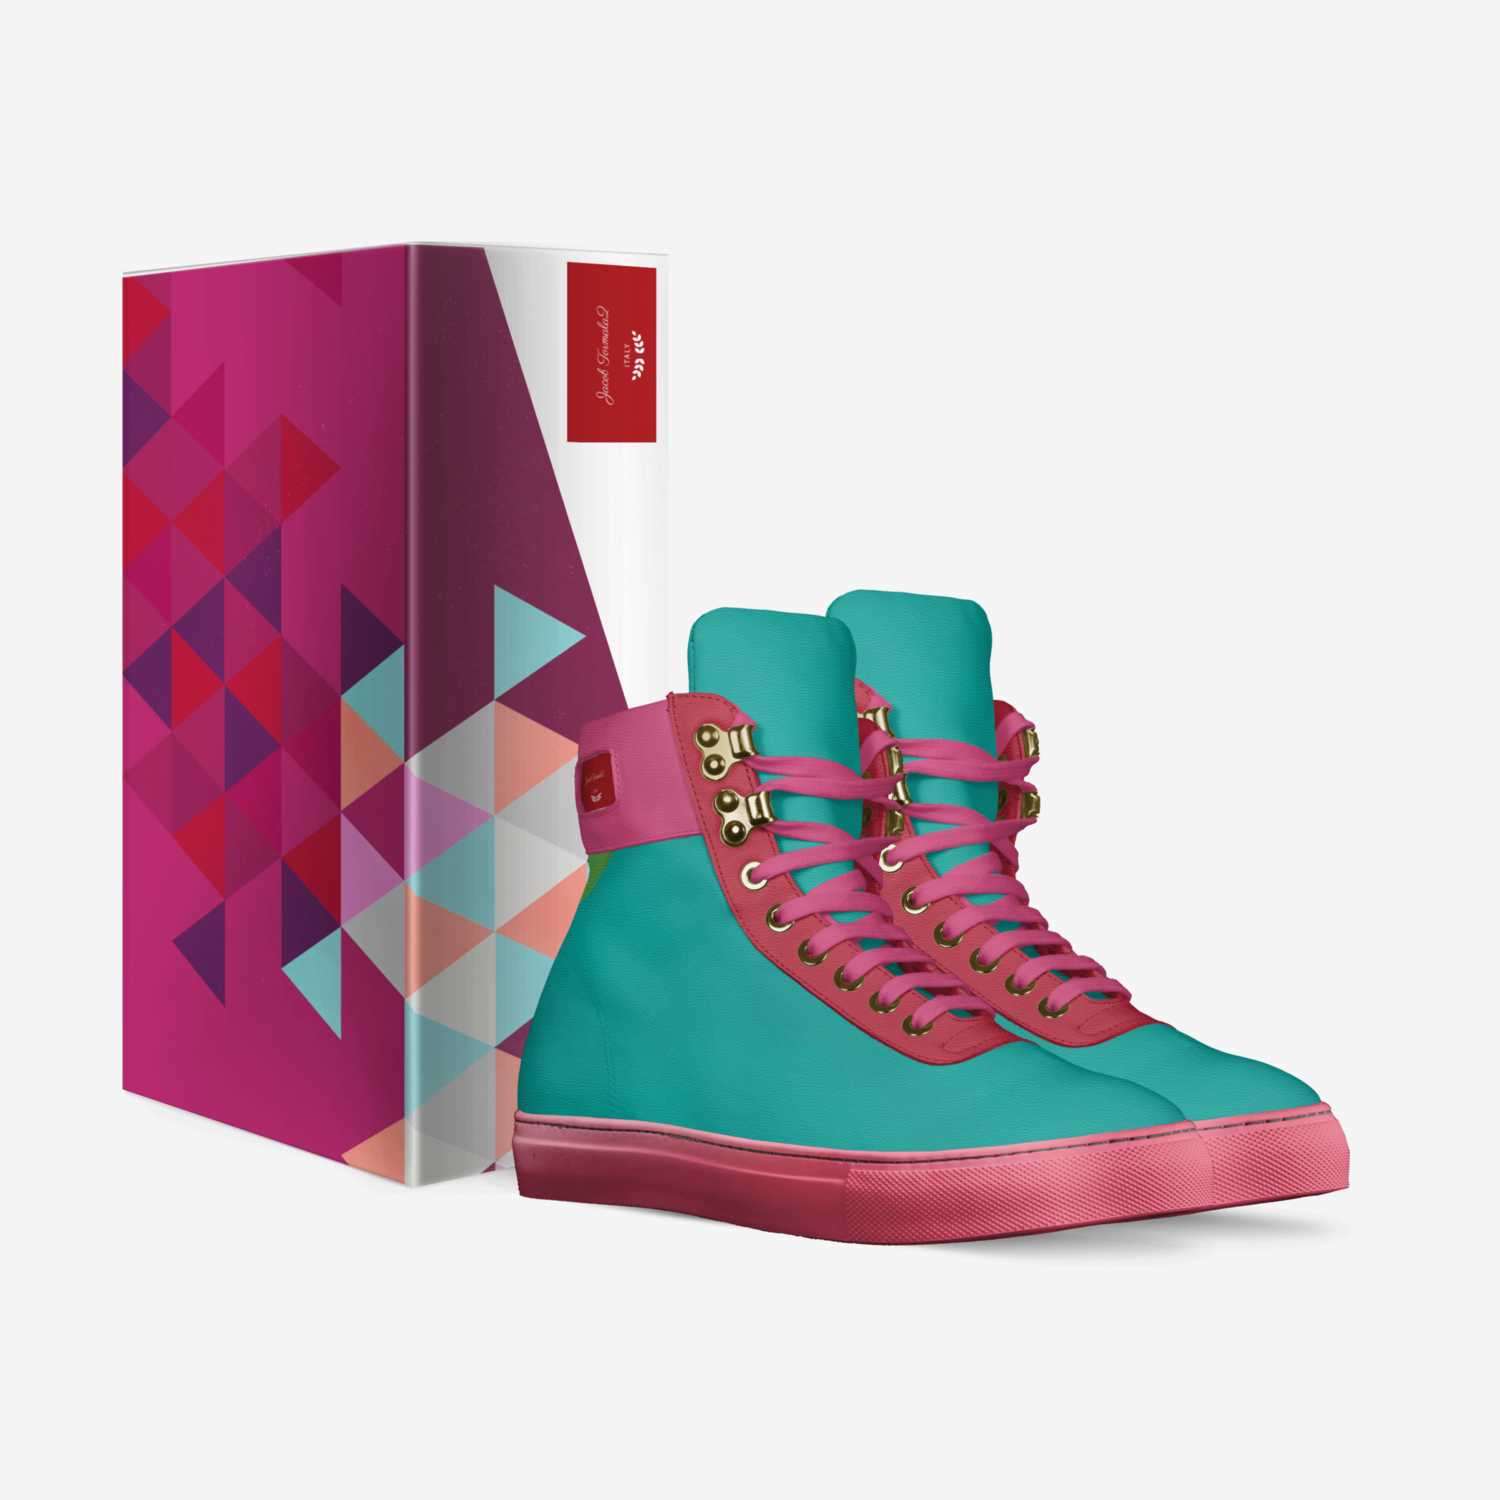 Jacob Tormala2 custom made in Italy shoes by Jacob Tormala | Box view